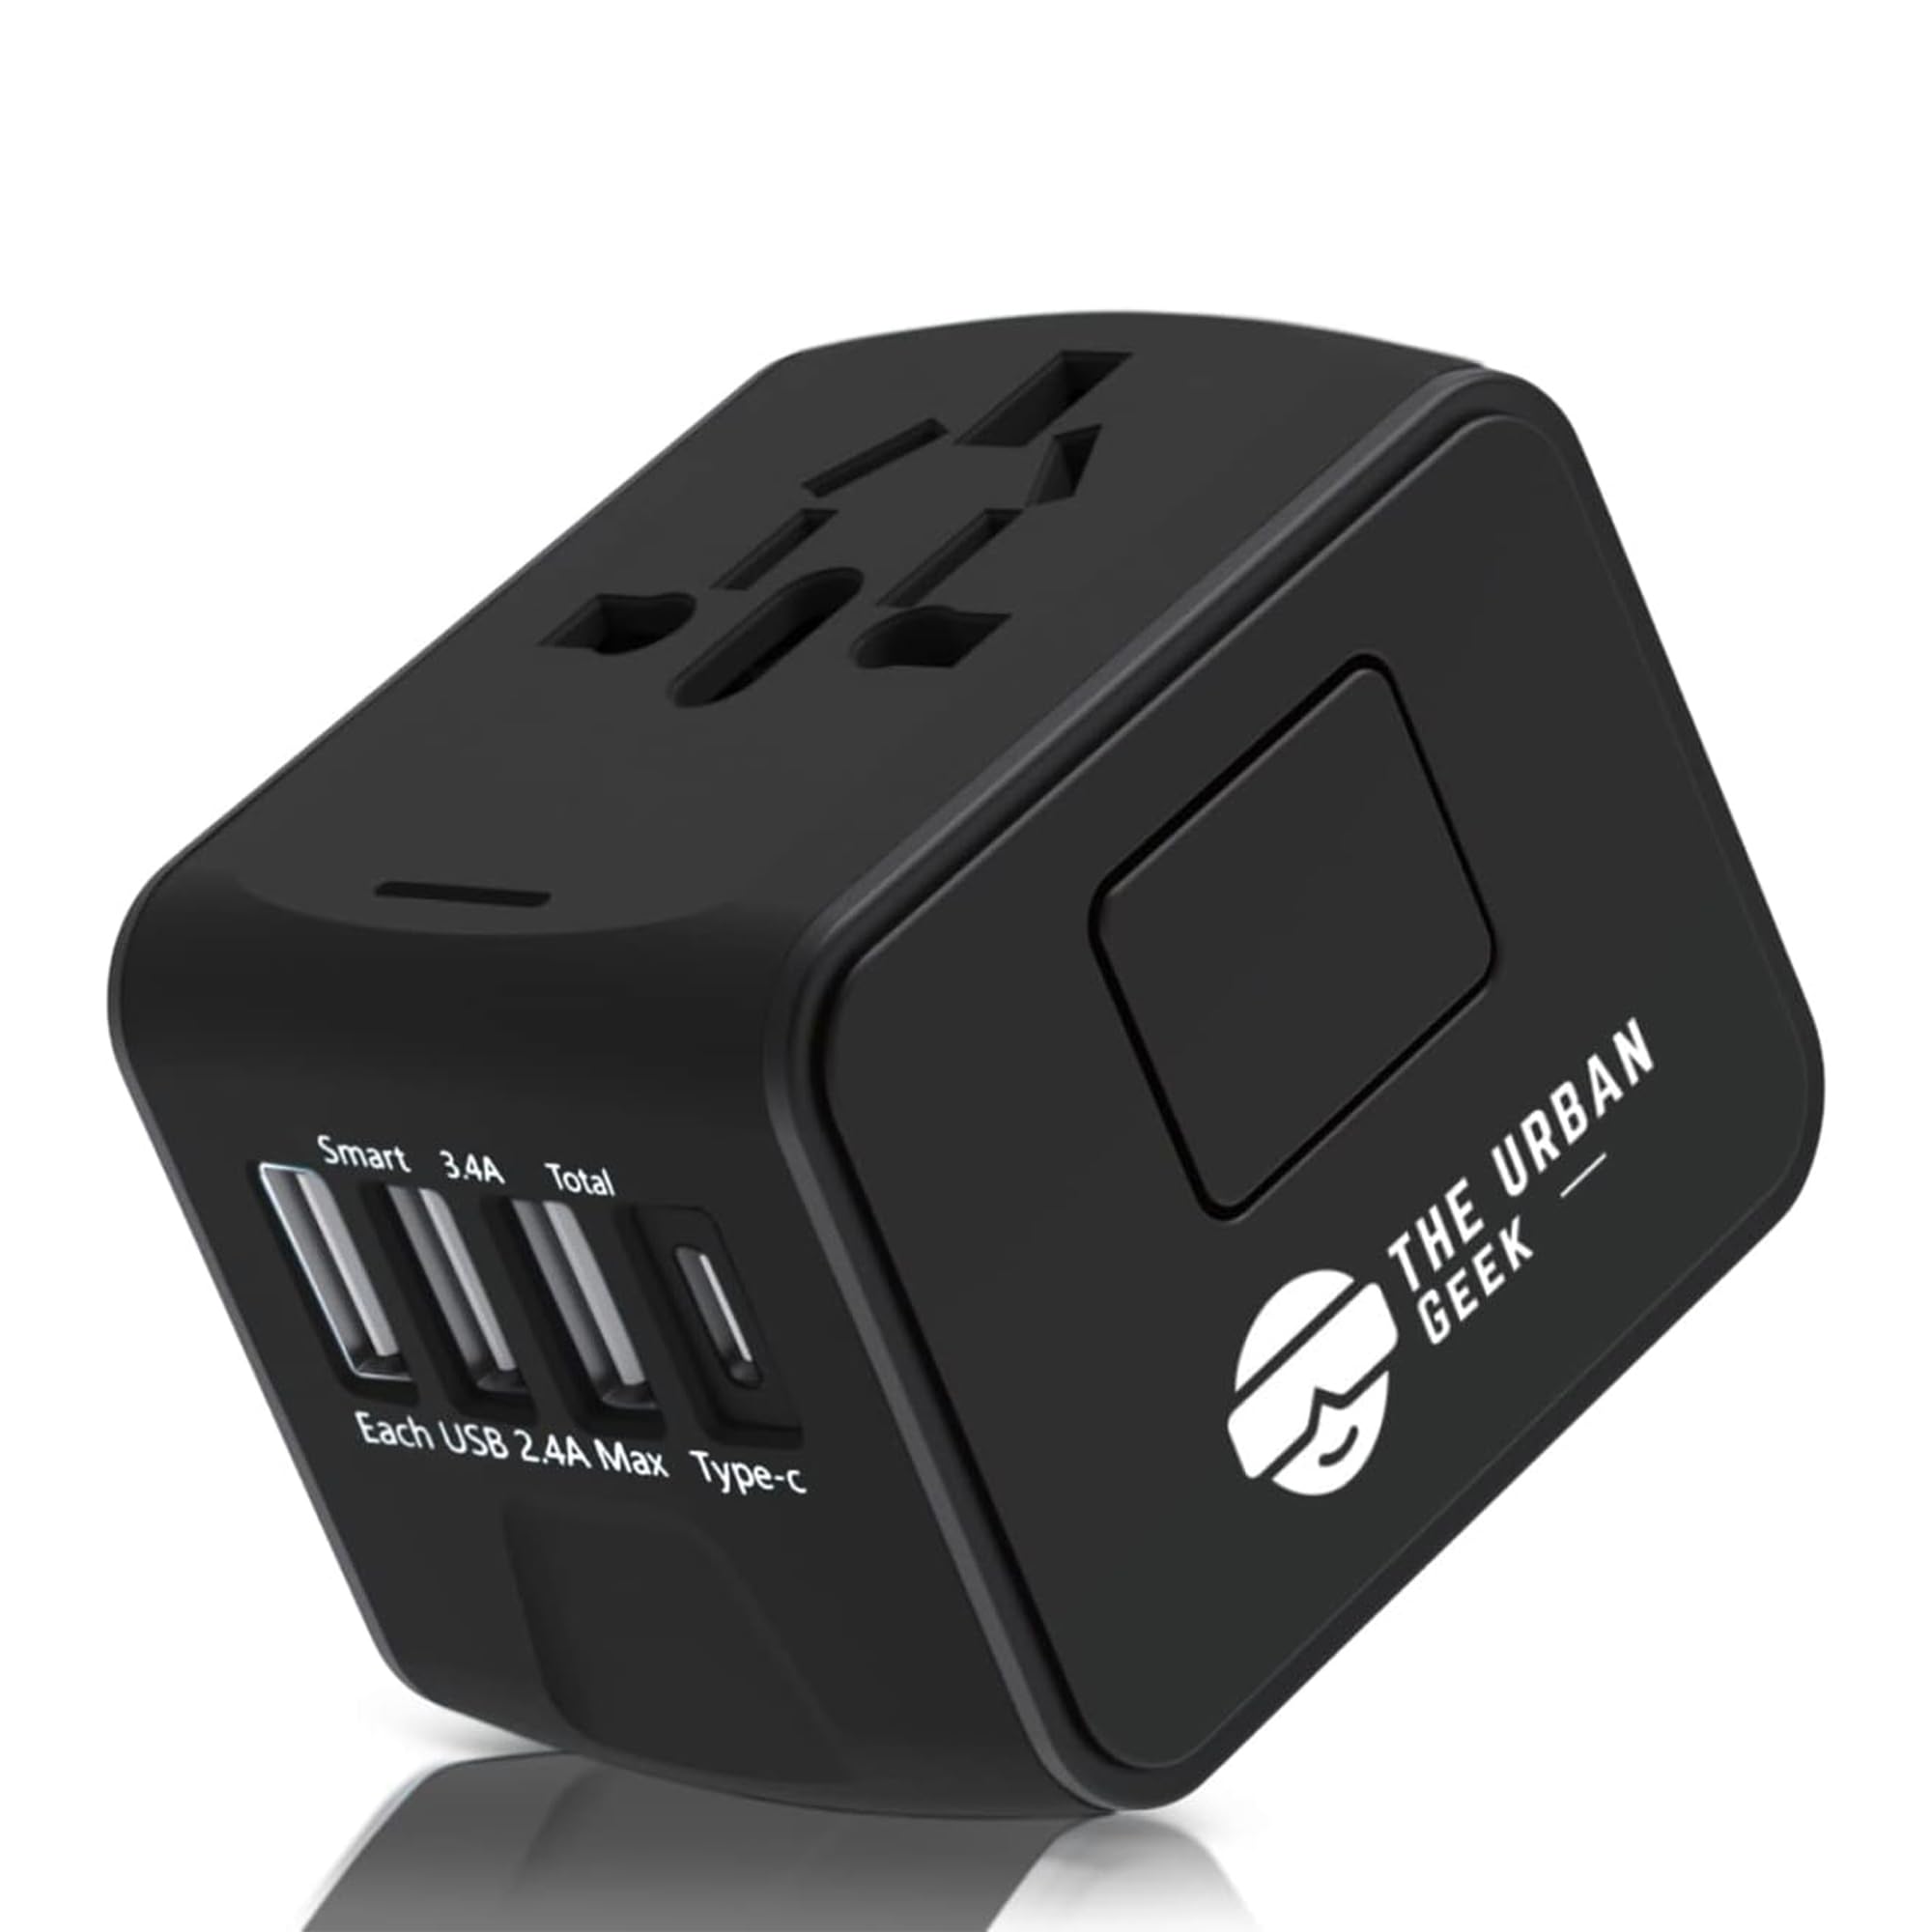 TheUrbanGeek Universal Power Adapter (Black) - International Travel Plug Adapter - Worldwide Charger